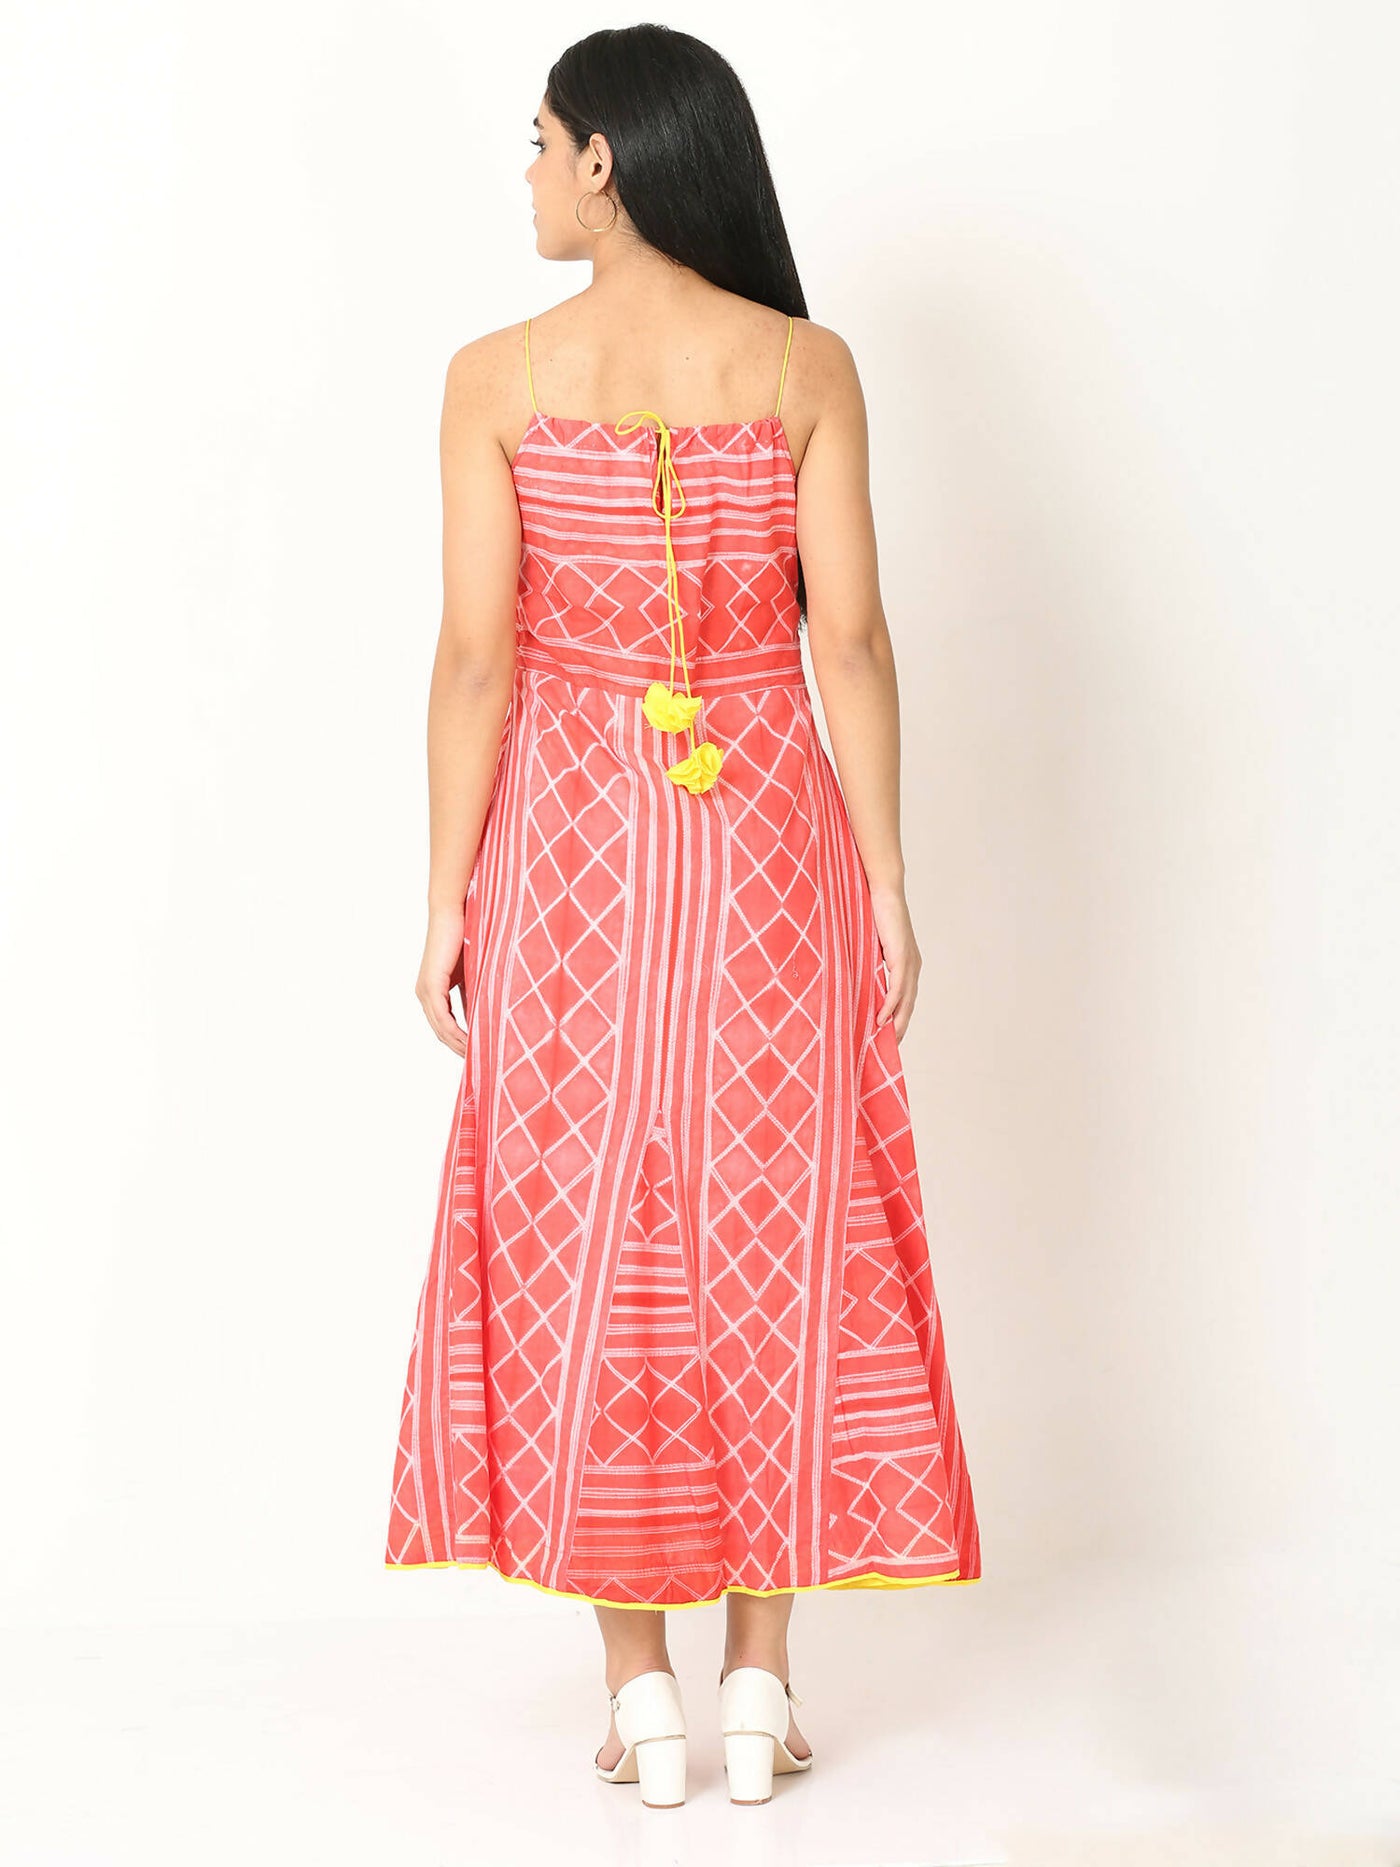 Shibori Godet dress